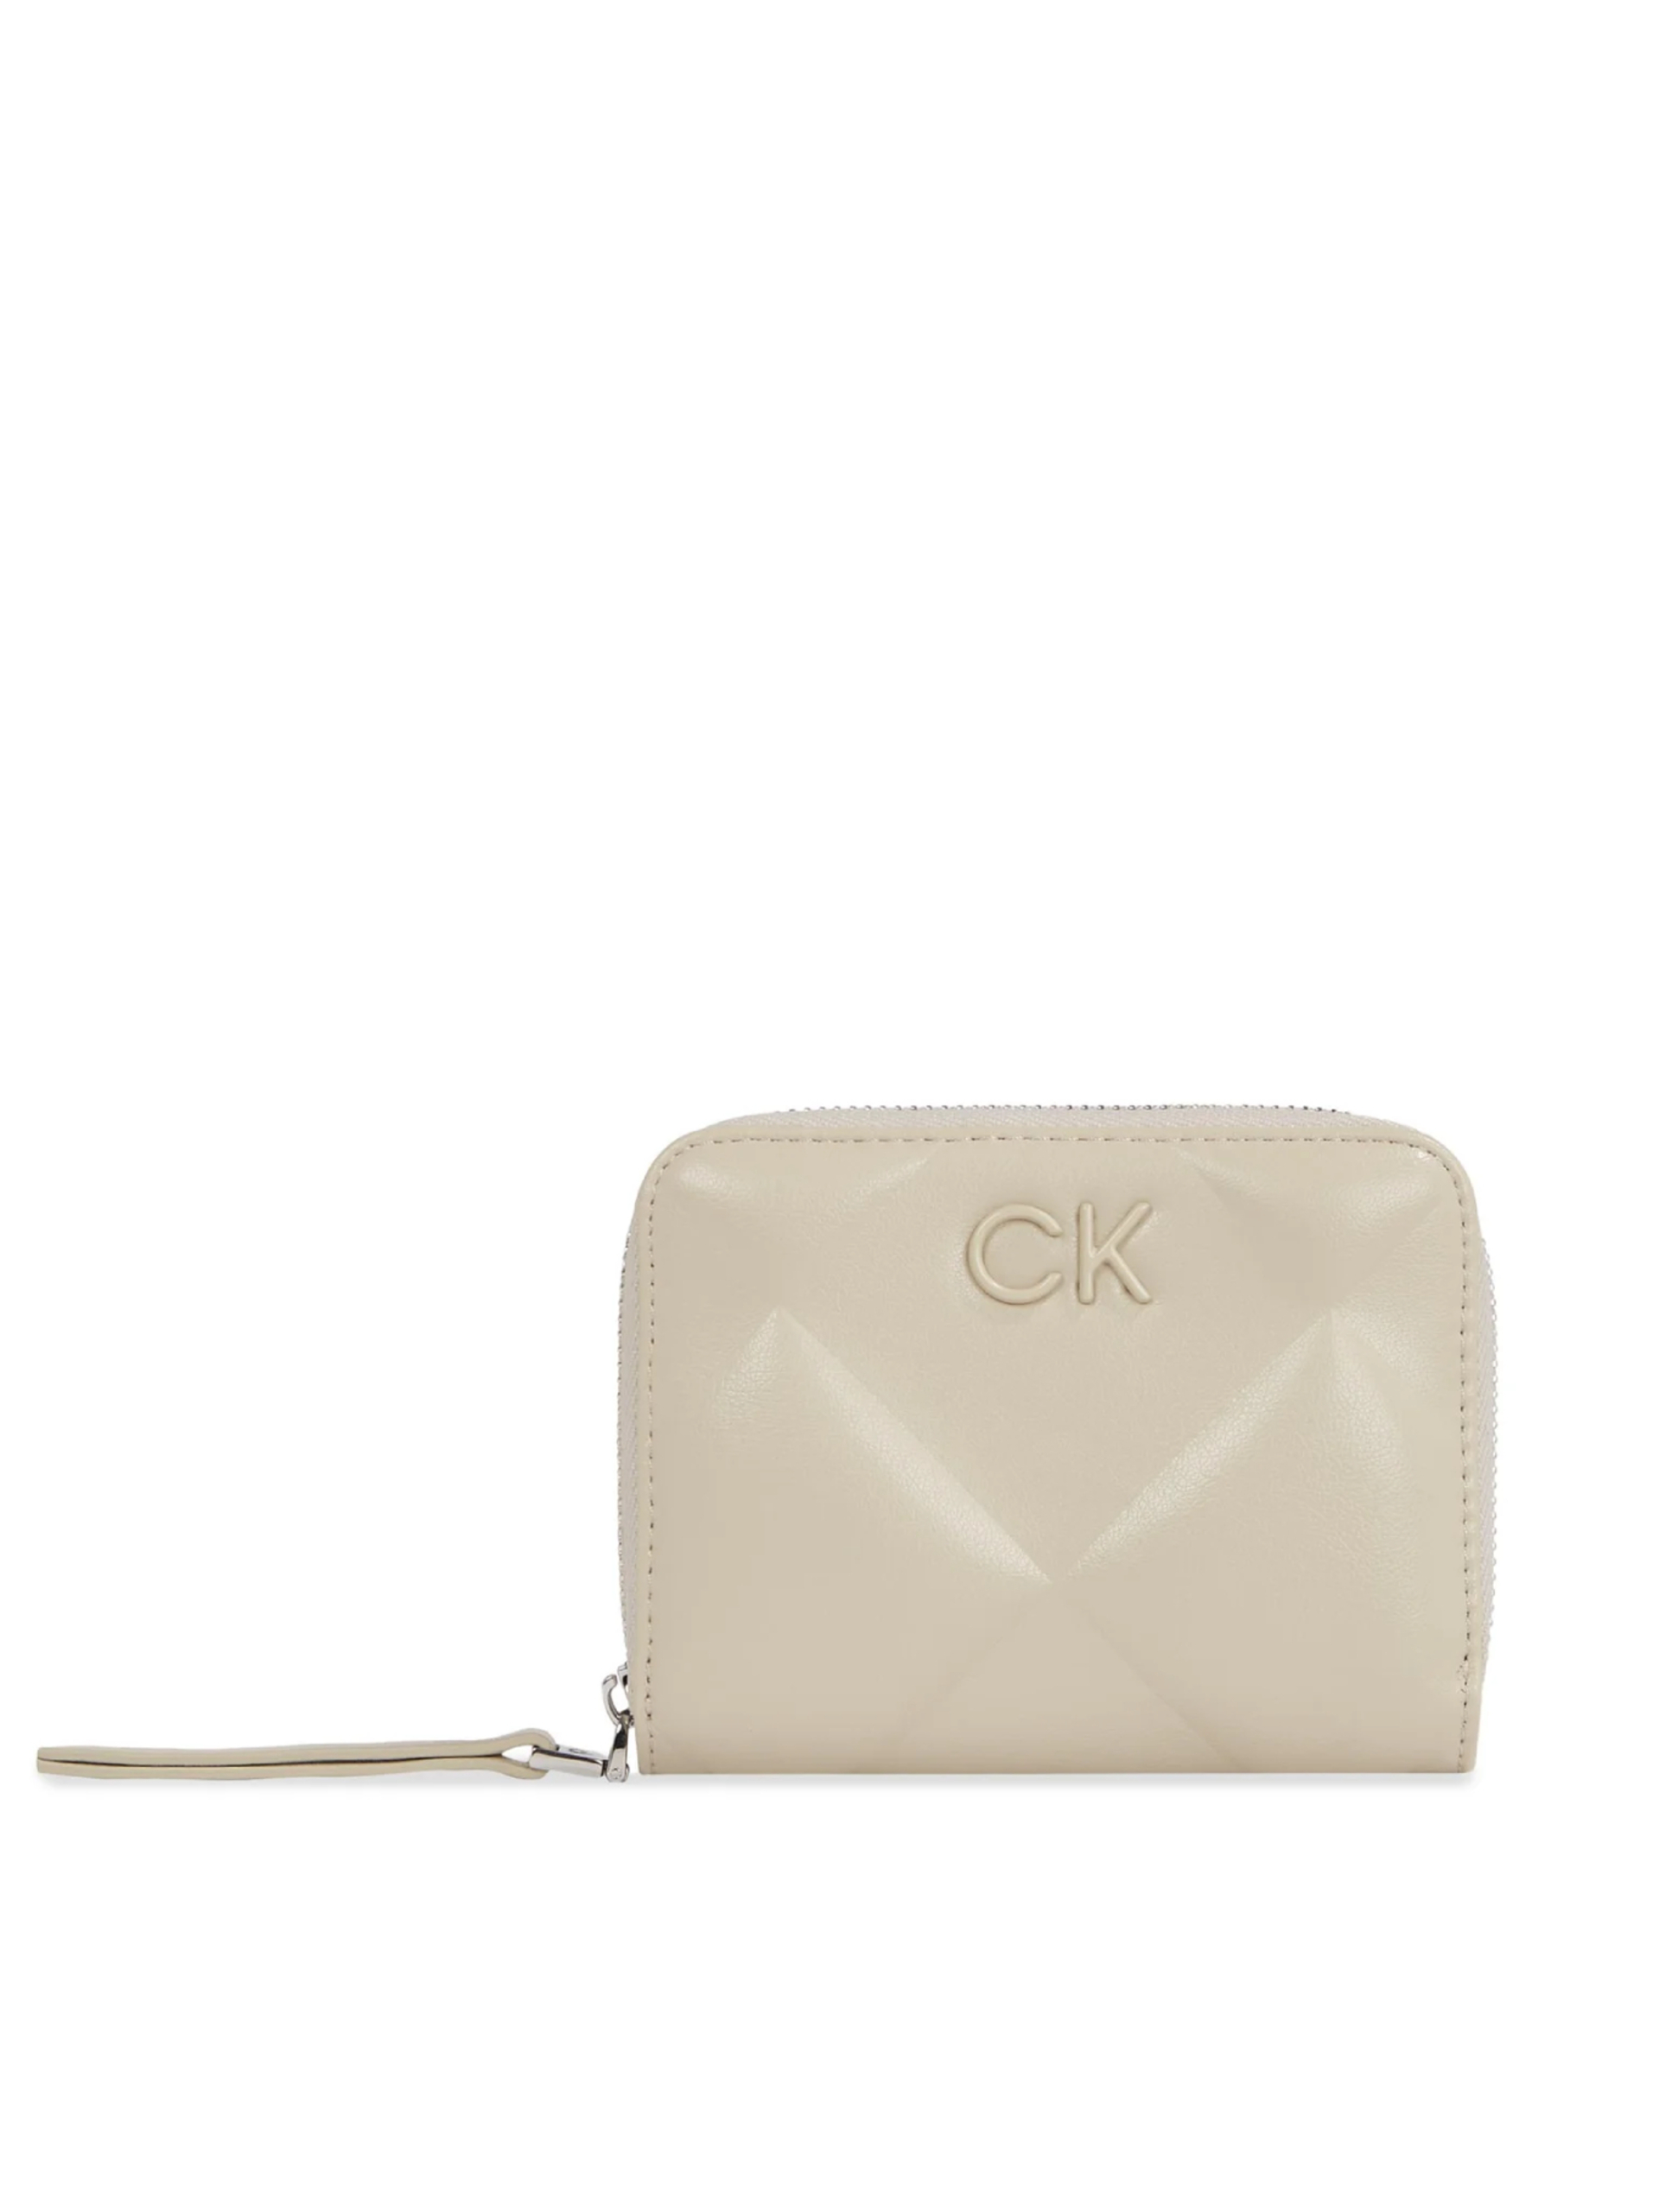 Calvin Klein dámská béžová peněženka - OS (PEA)